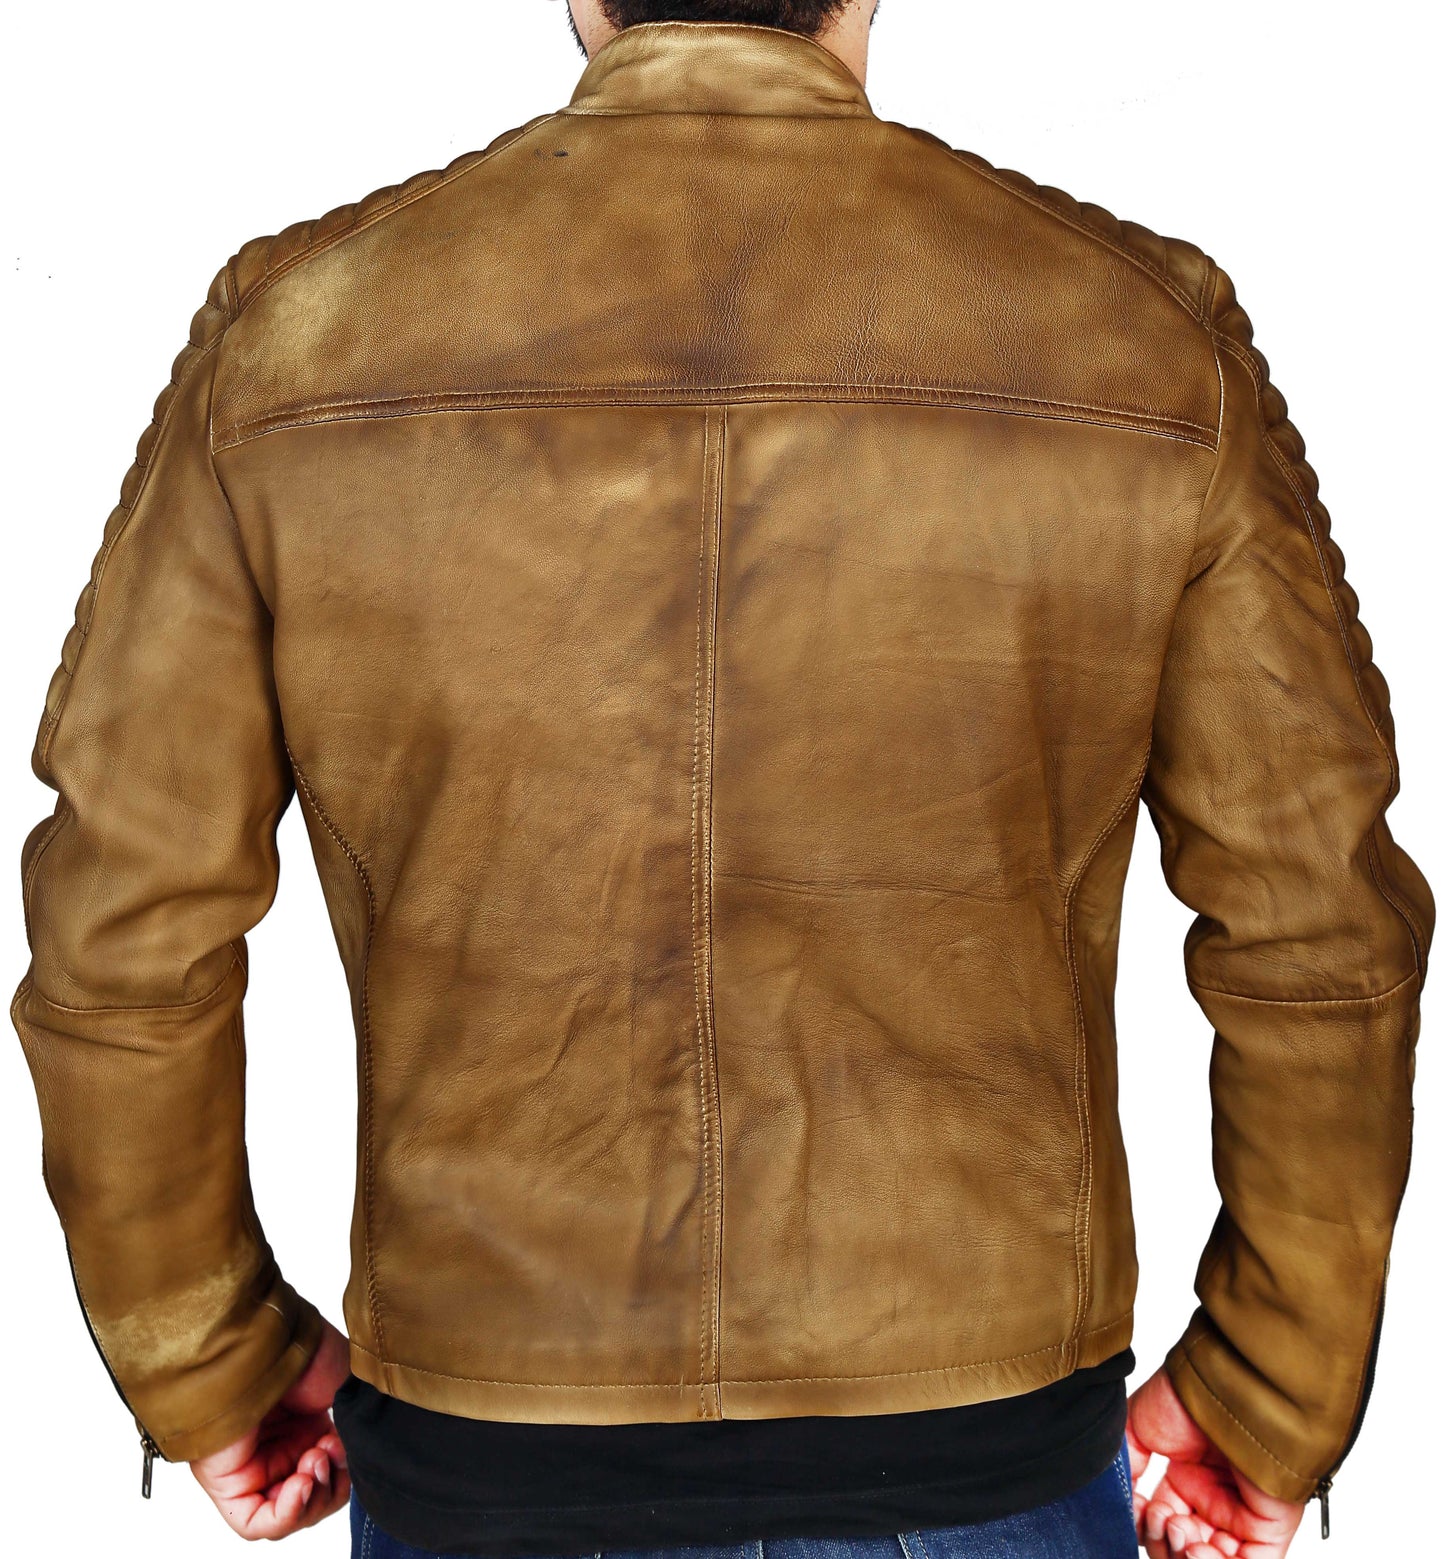 Men's Elite Herran Biker Motorcycle Distressed Tobaccos Leather Jacket